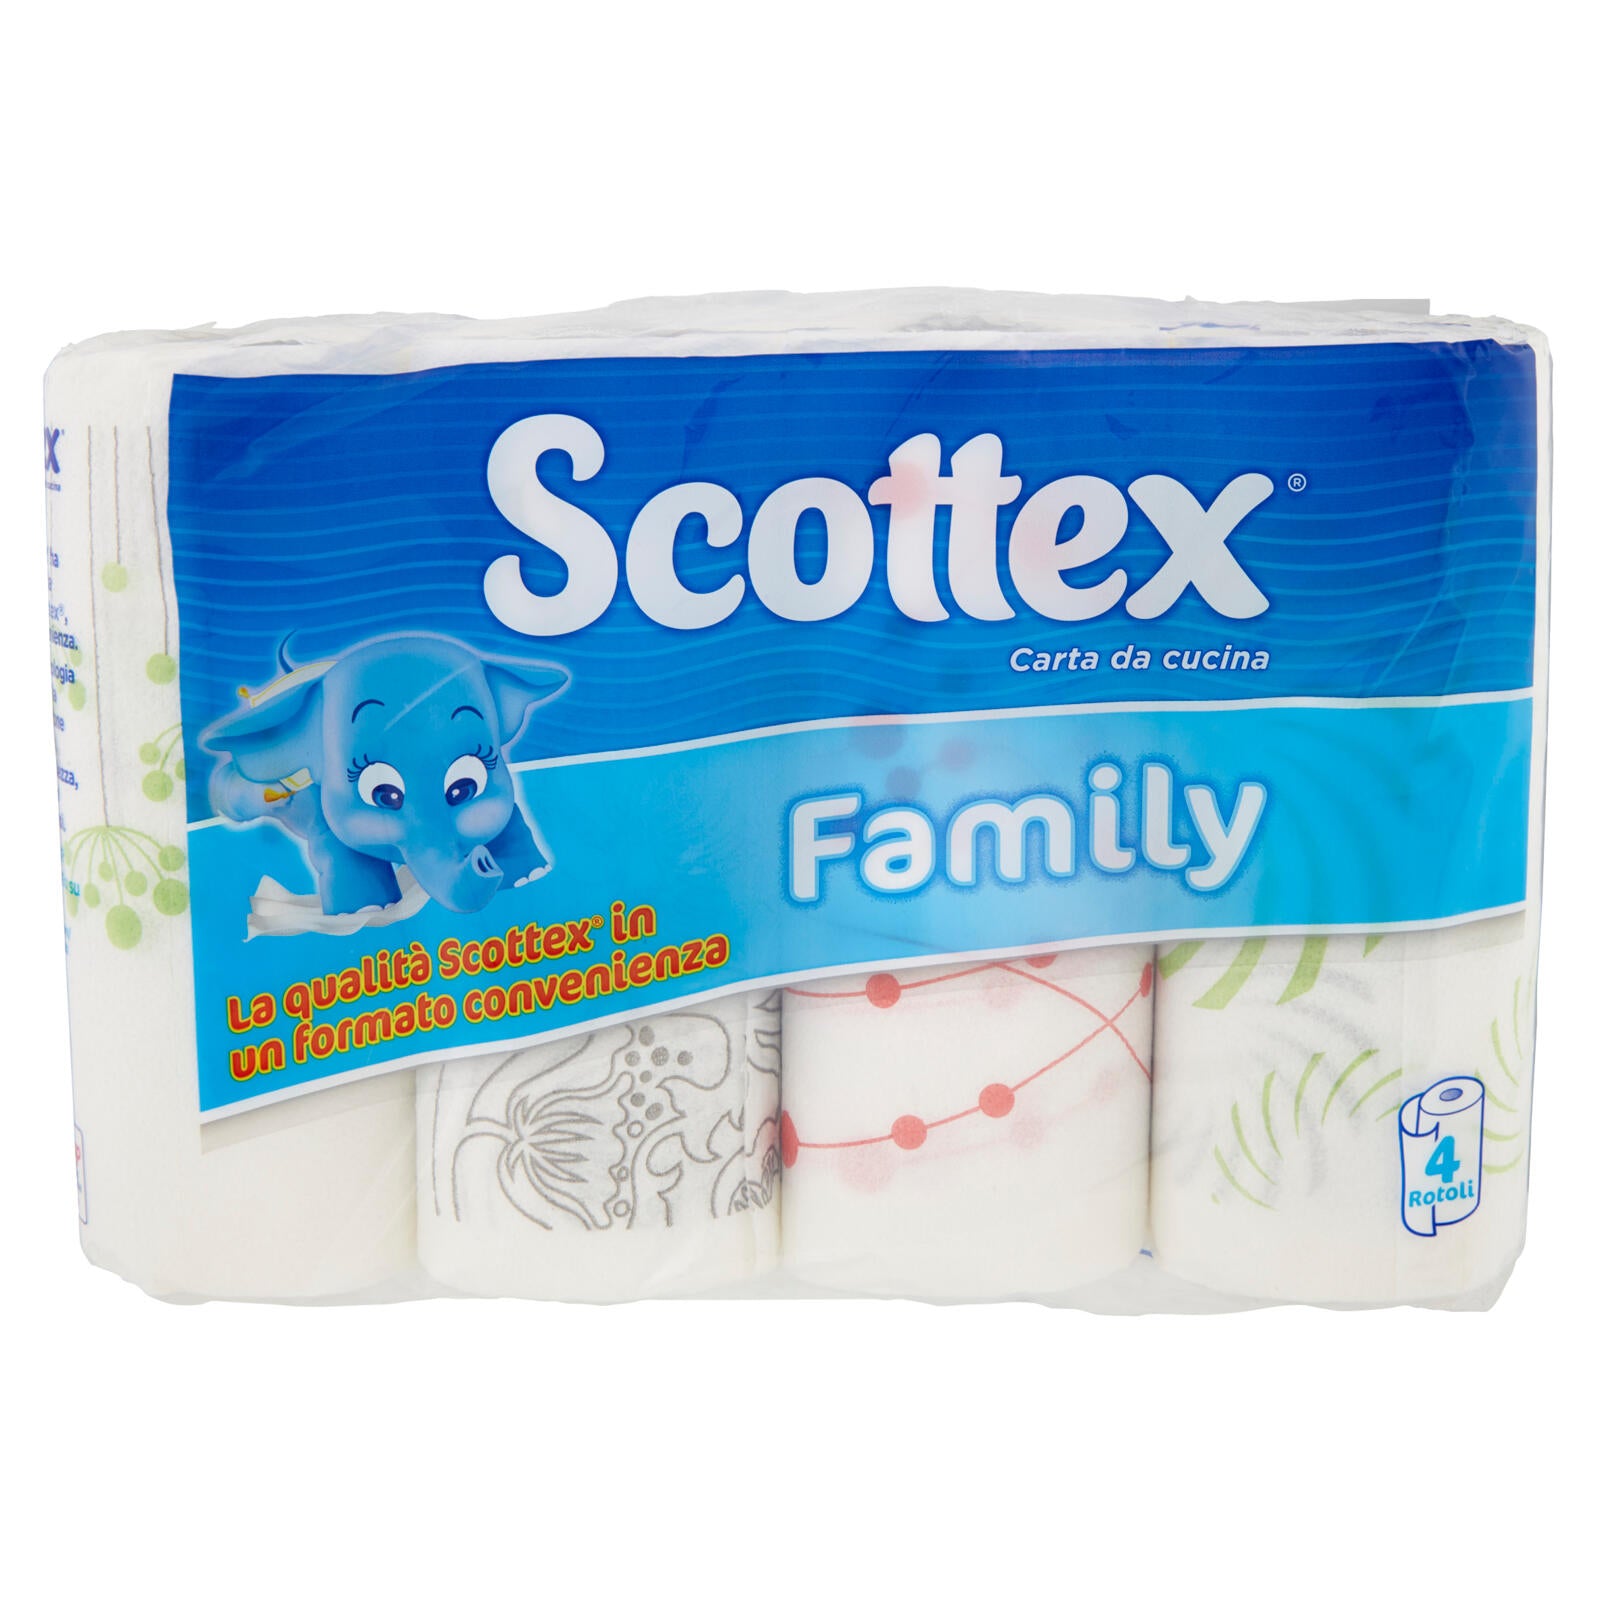 Scottex Family Carta da cucina 4 rotoli ->